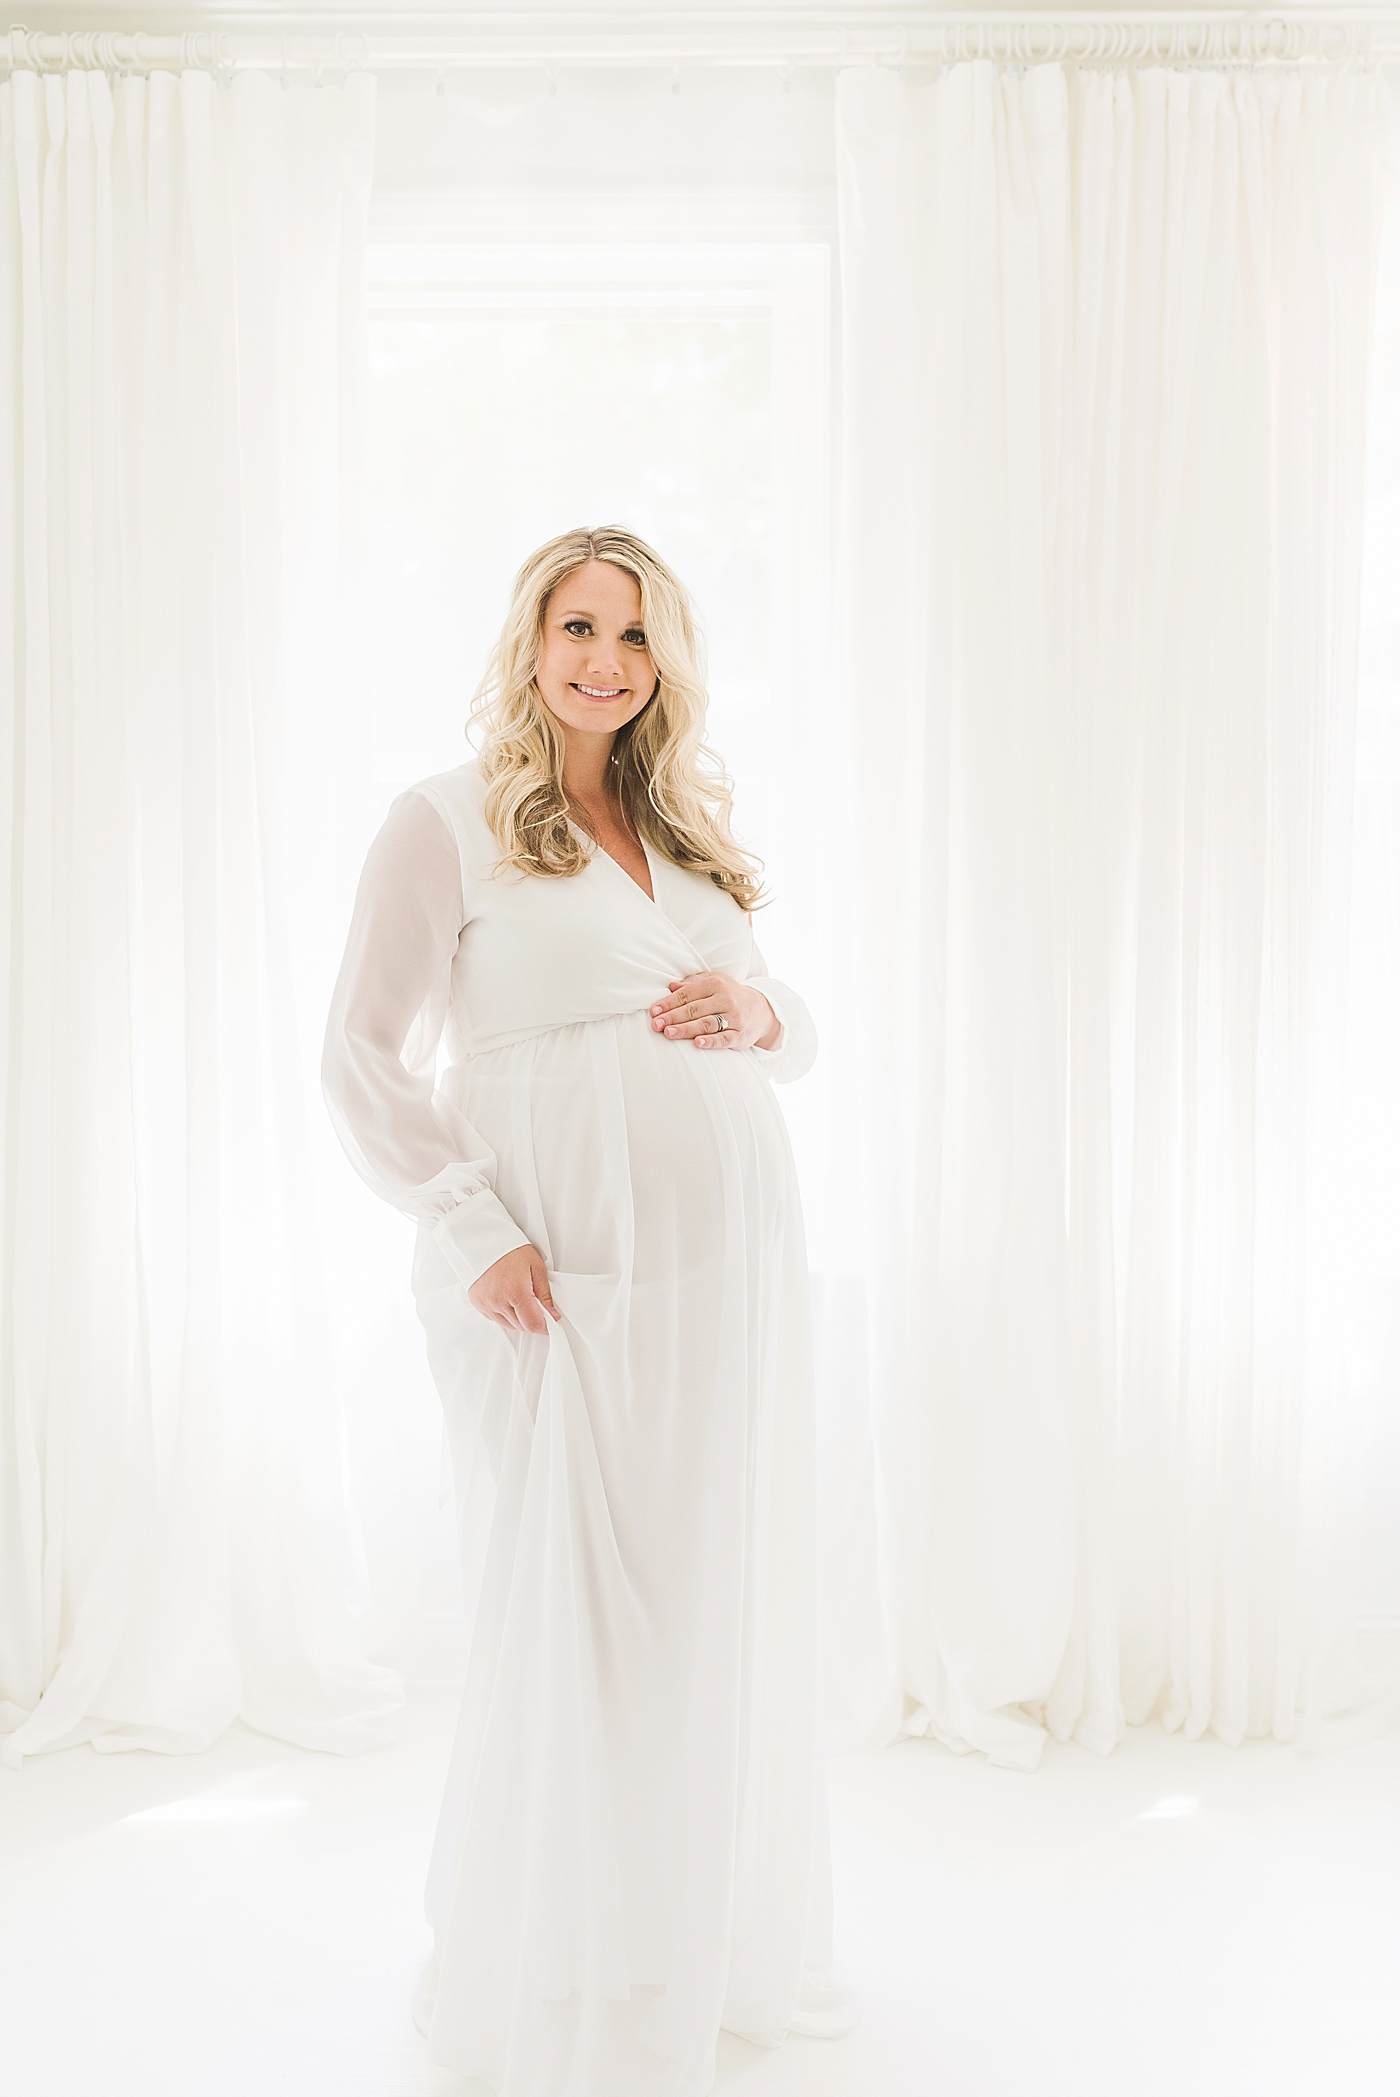 Mom to be in sheer white dress | Photo by Huntersville Newborn Photographer Anna Wisjo 